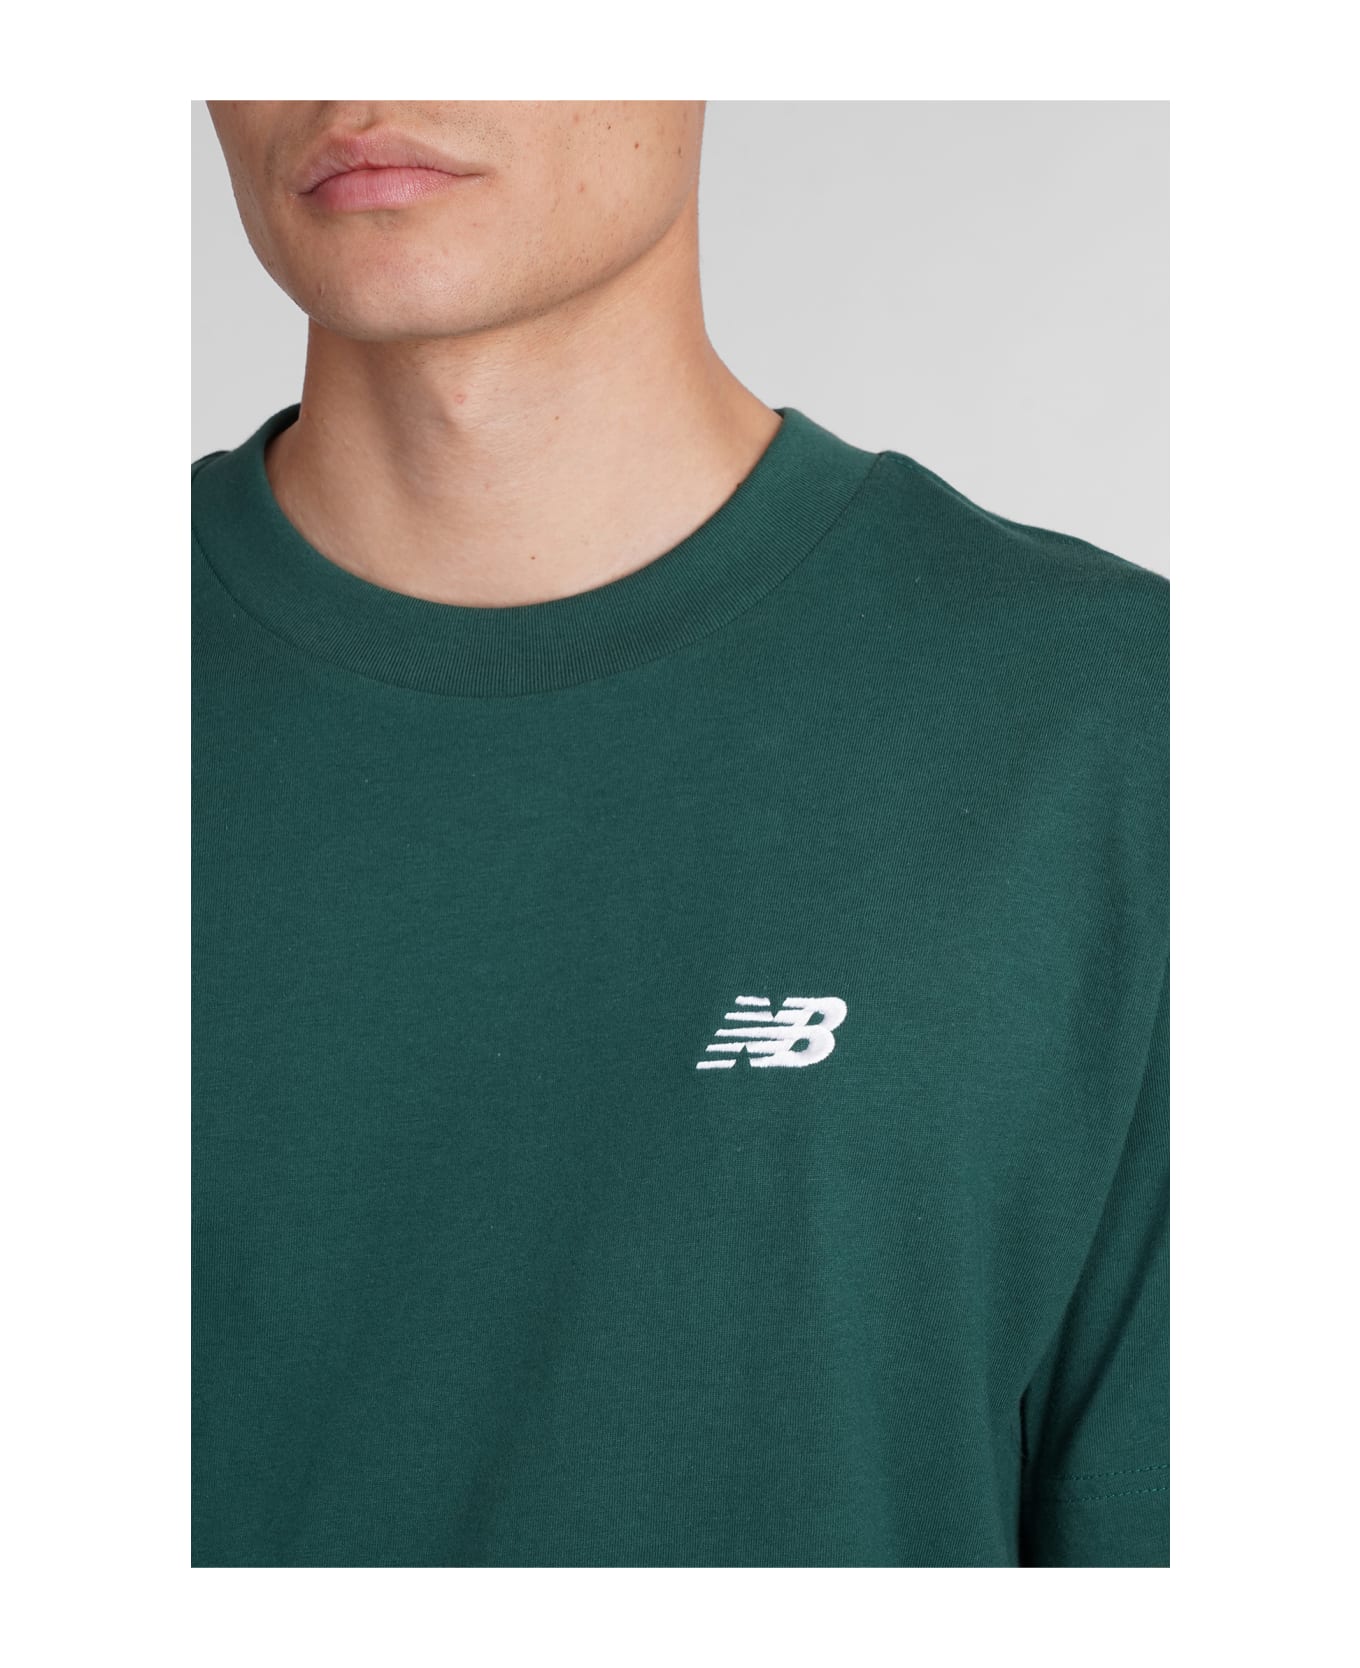 New Balance T-shirt In Green Cotton - green